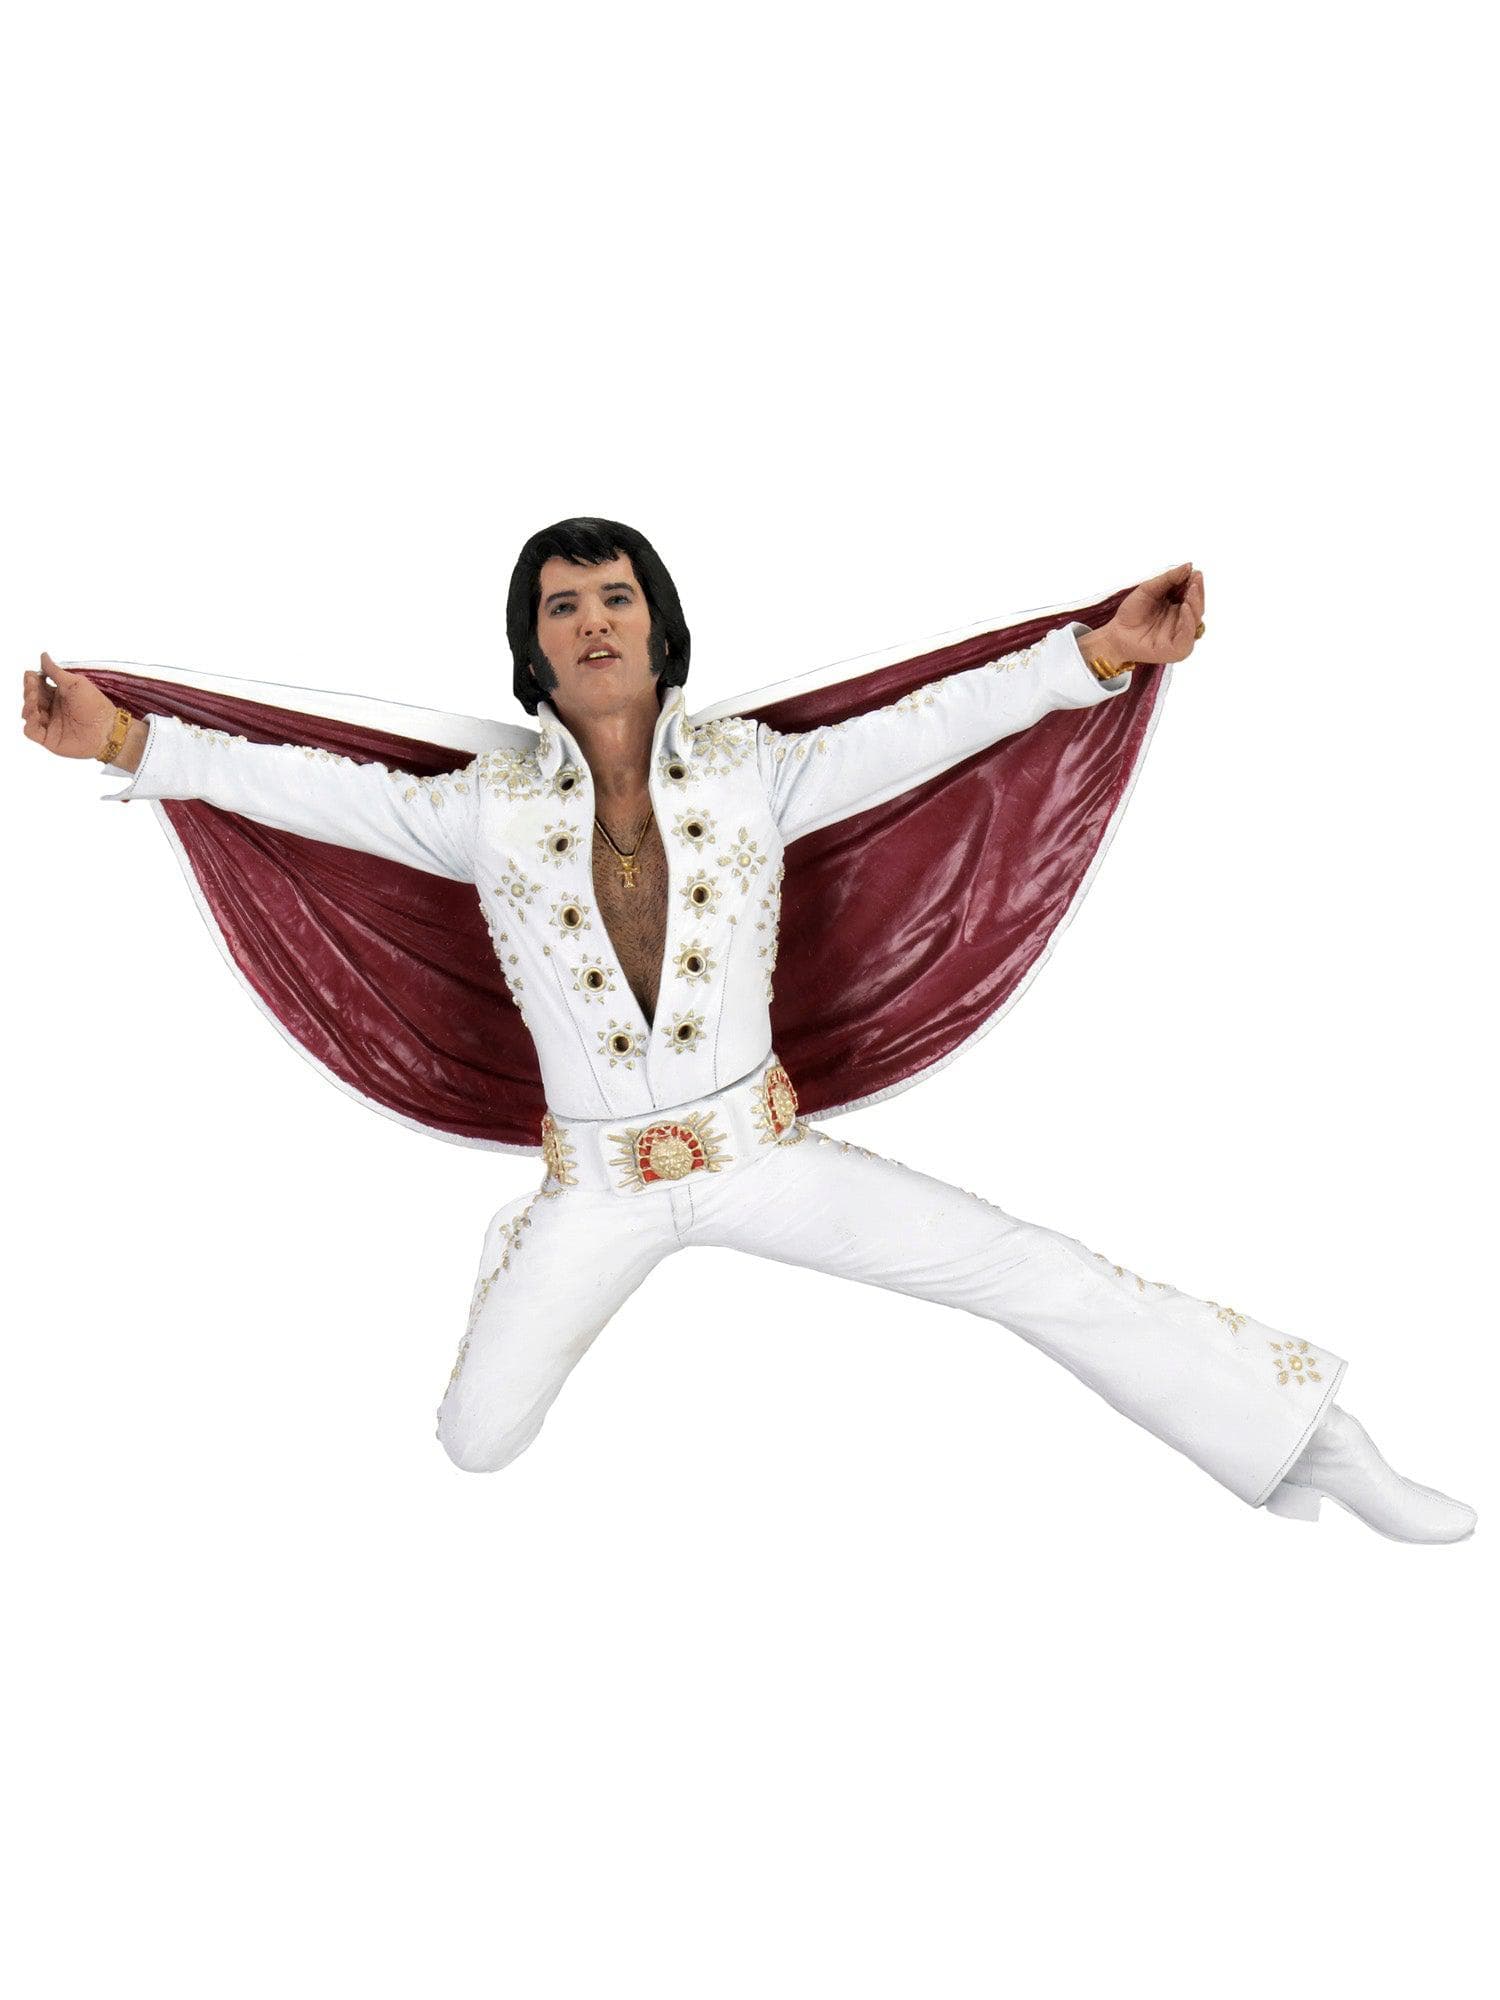 NECA - Elvis Presley - 7" Scale Action Figure - Elvis Presley Live in '72 - costumes.com